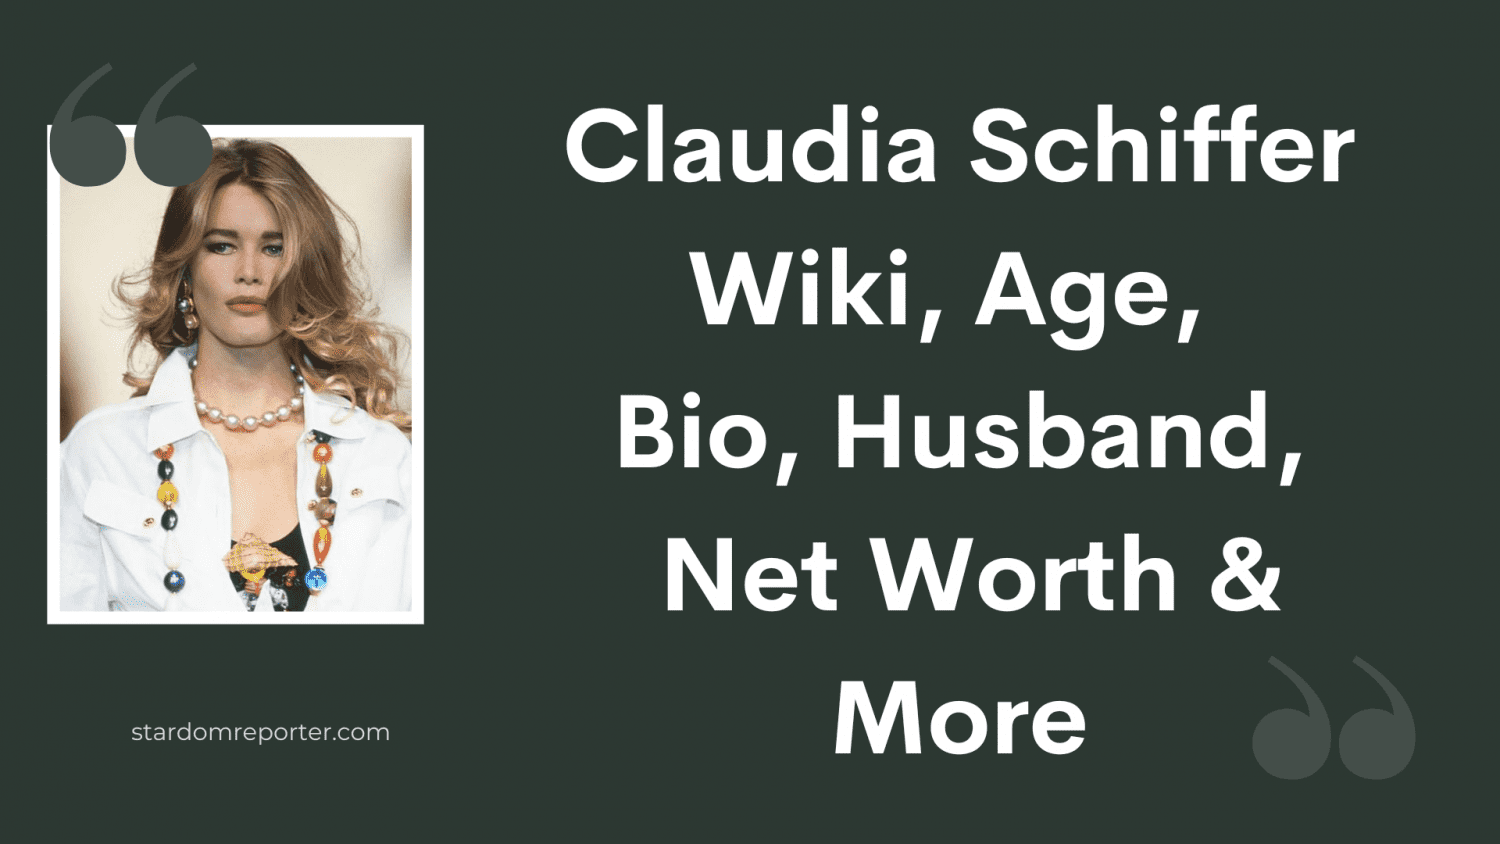 Claudia Schiffer Wiki, Age, Bio, Husband, Net Worth & More - 31